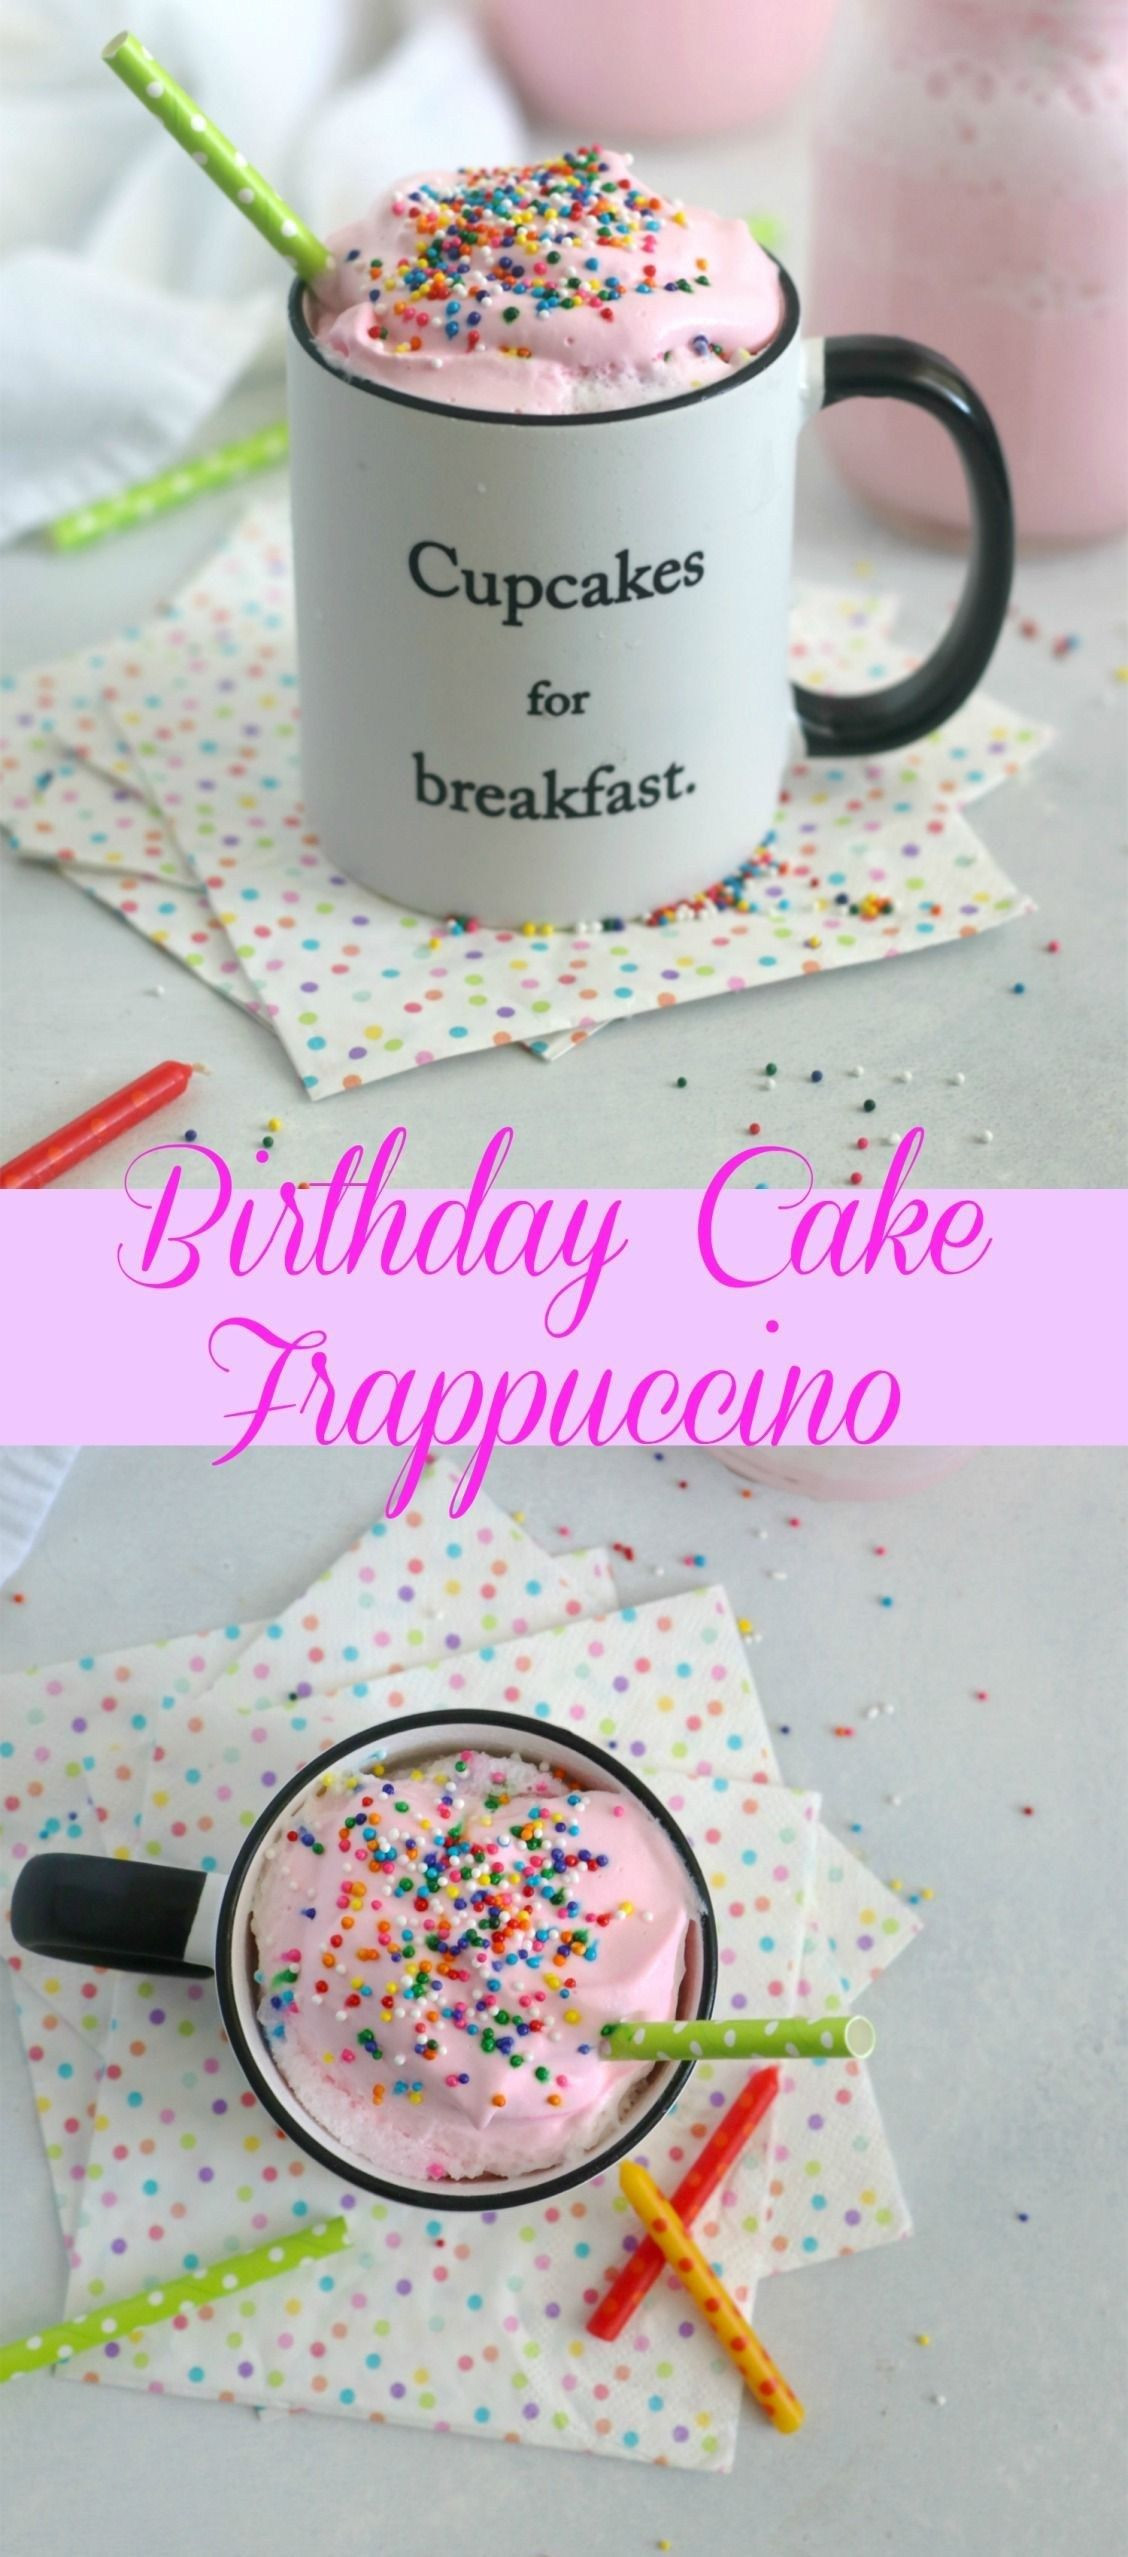 Birthday Cake Frappuccino Recipe
 27 Excellent Image of Birthday Cake Frappuccino Recipe